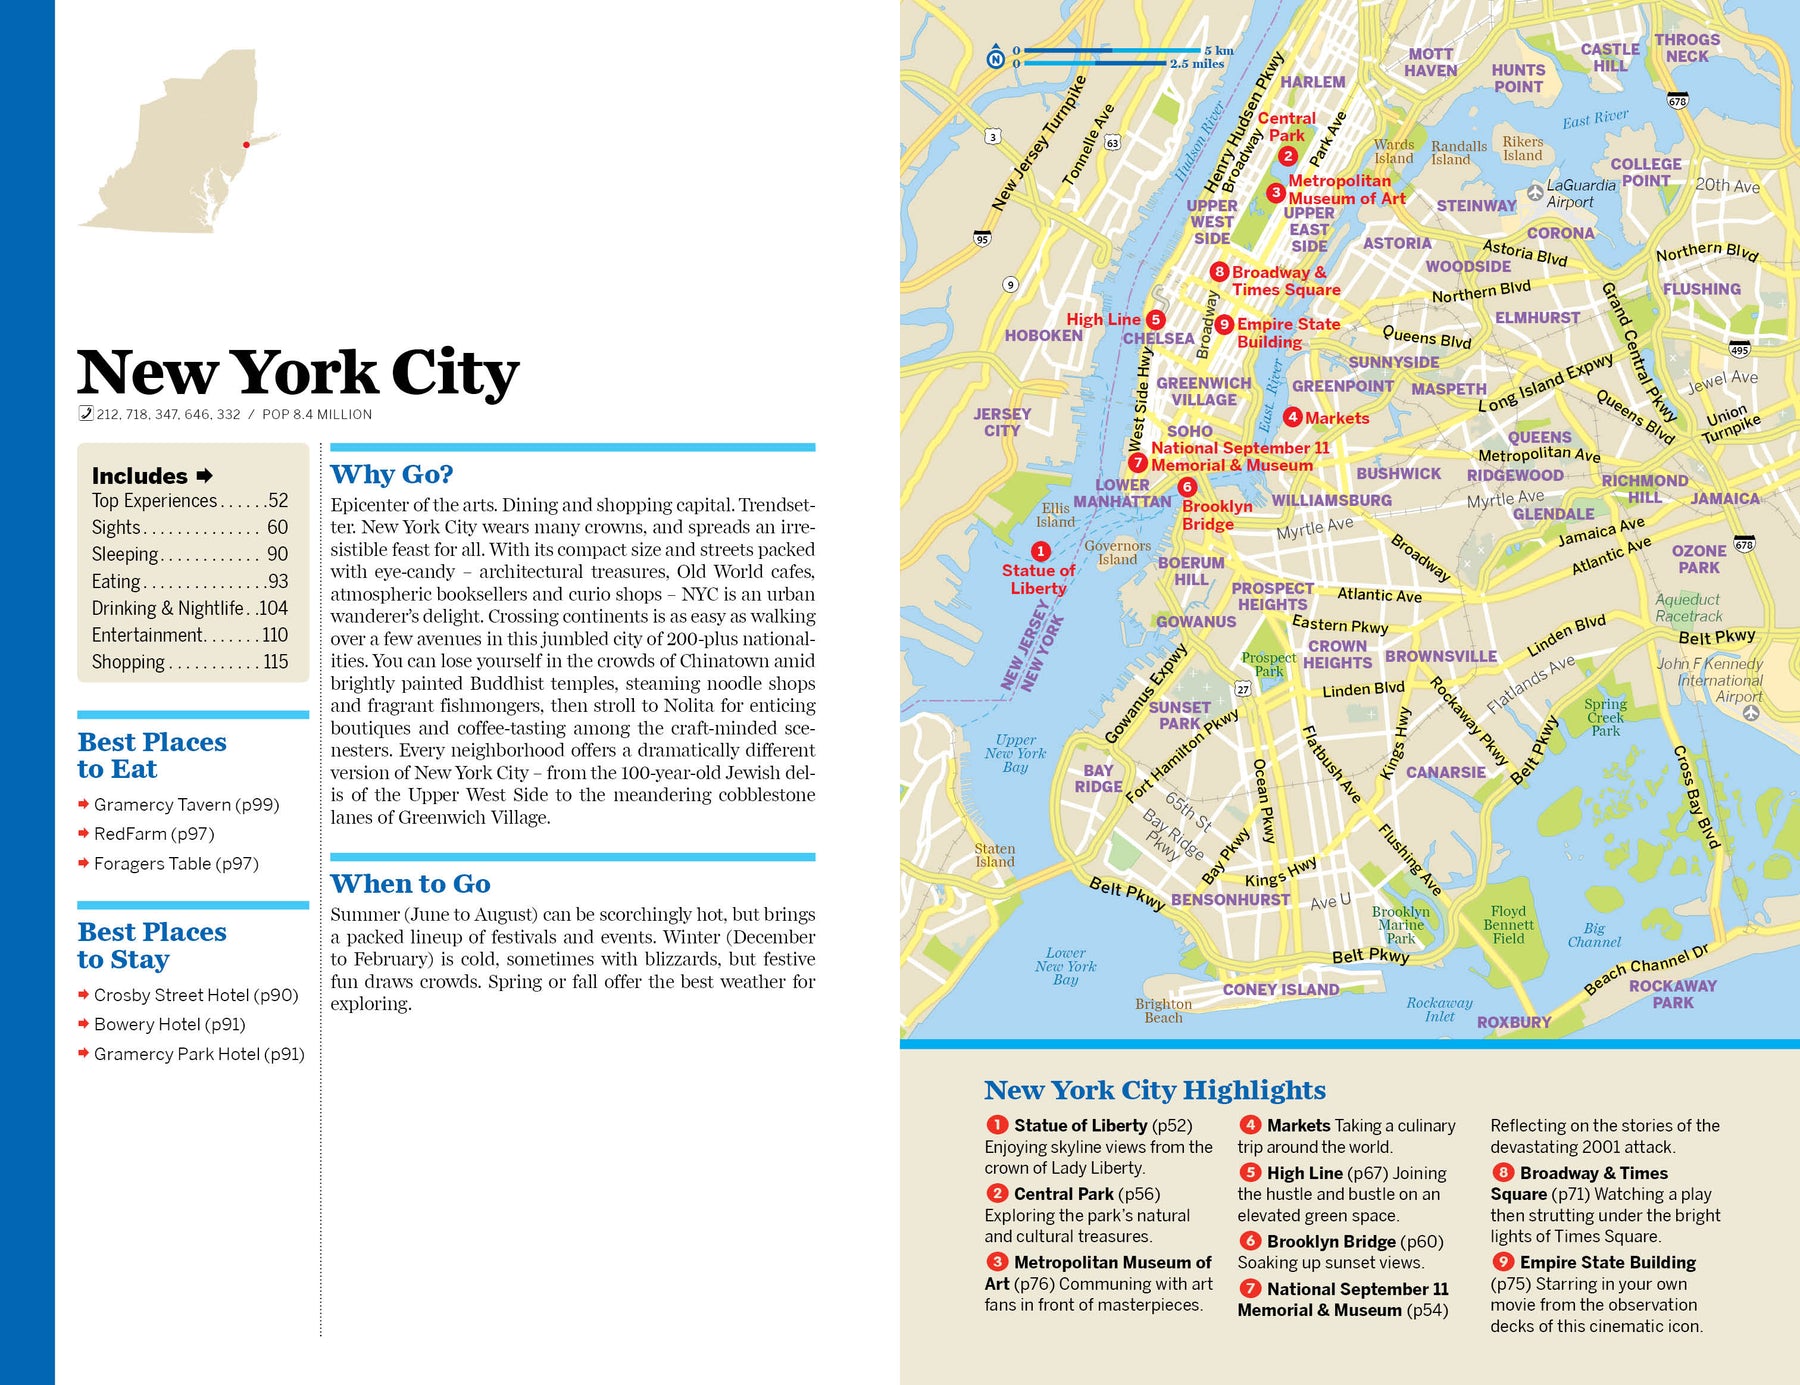 New York & the Mid-Atlantic - Book + eBook